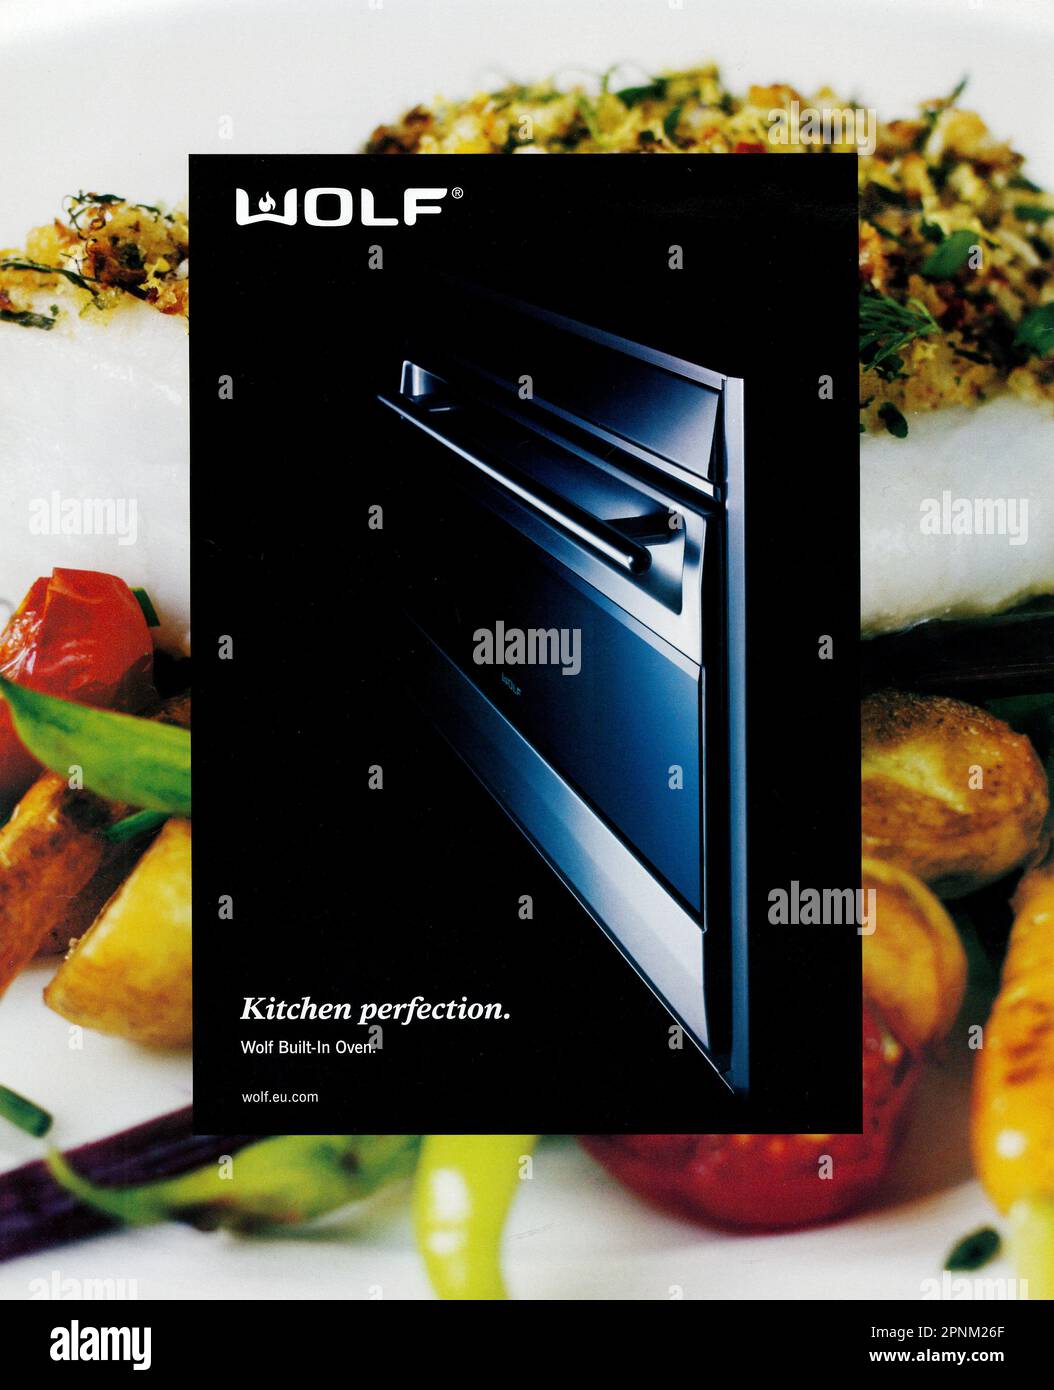 Wolf - Luxury Kitchen  Appliances advert in a magazine, 2006 Stock Photo